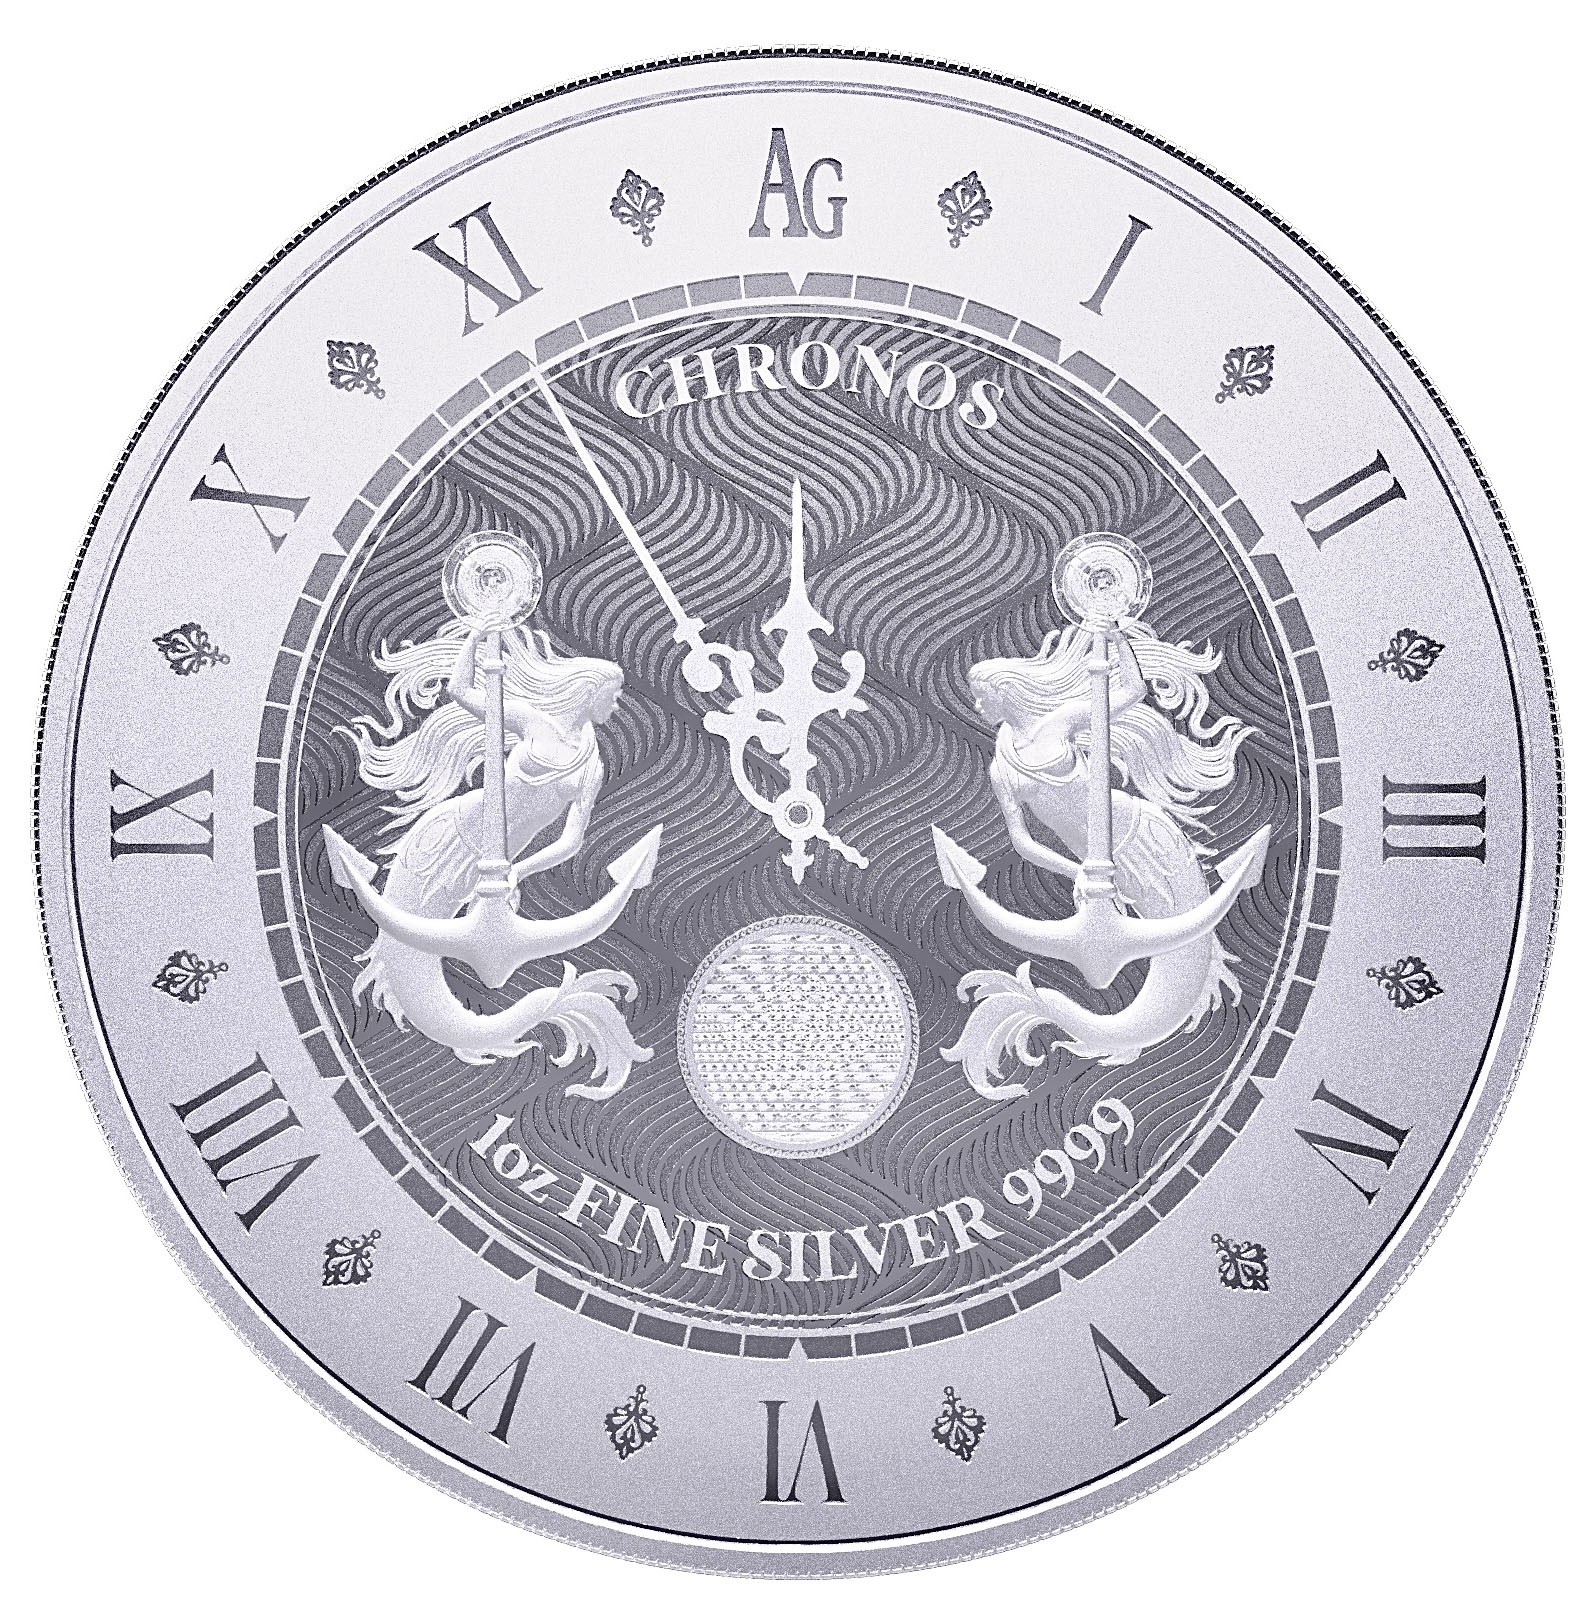 2021 1 oz $5 NZD Tokelau Silver Chronos Coin BU | European Mint